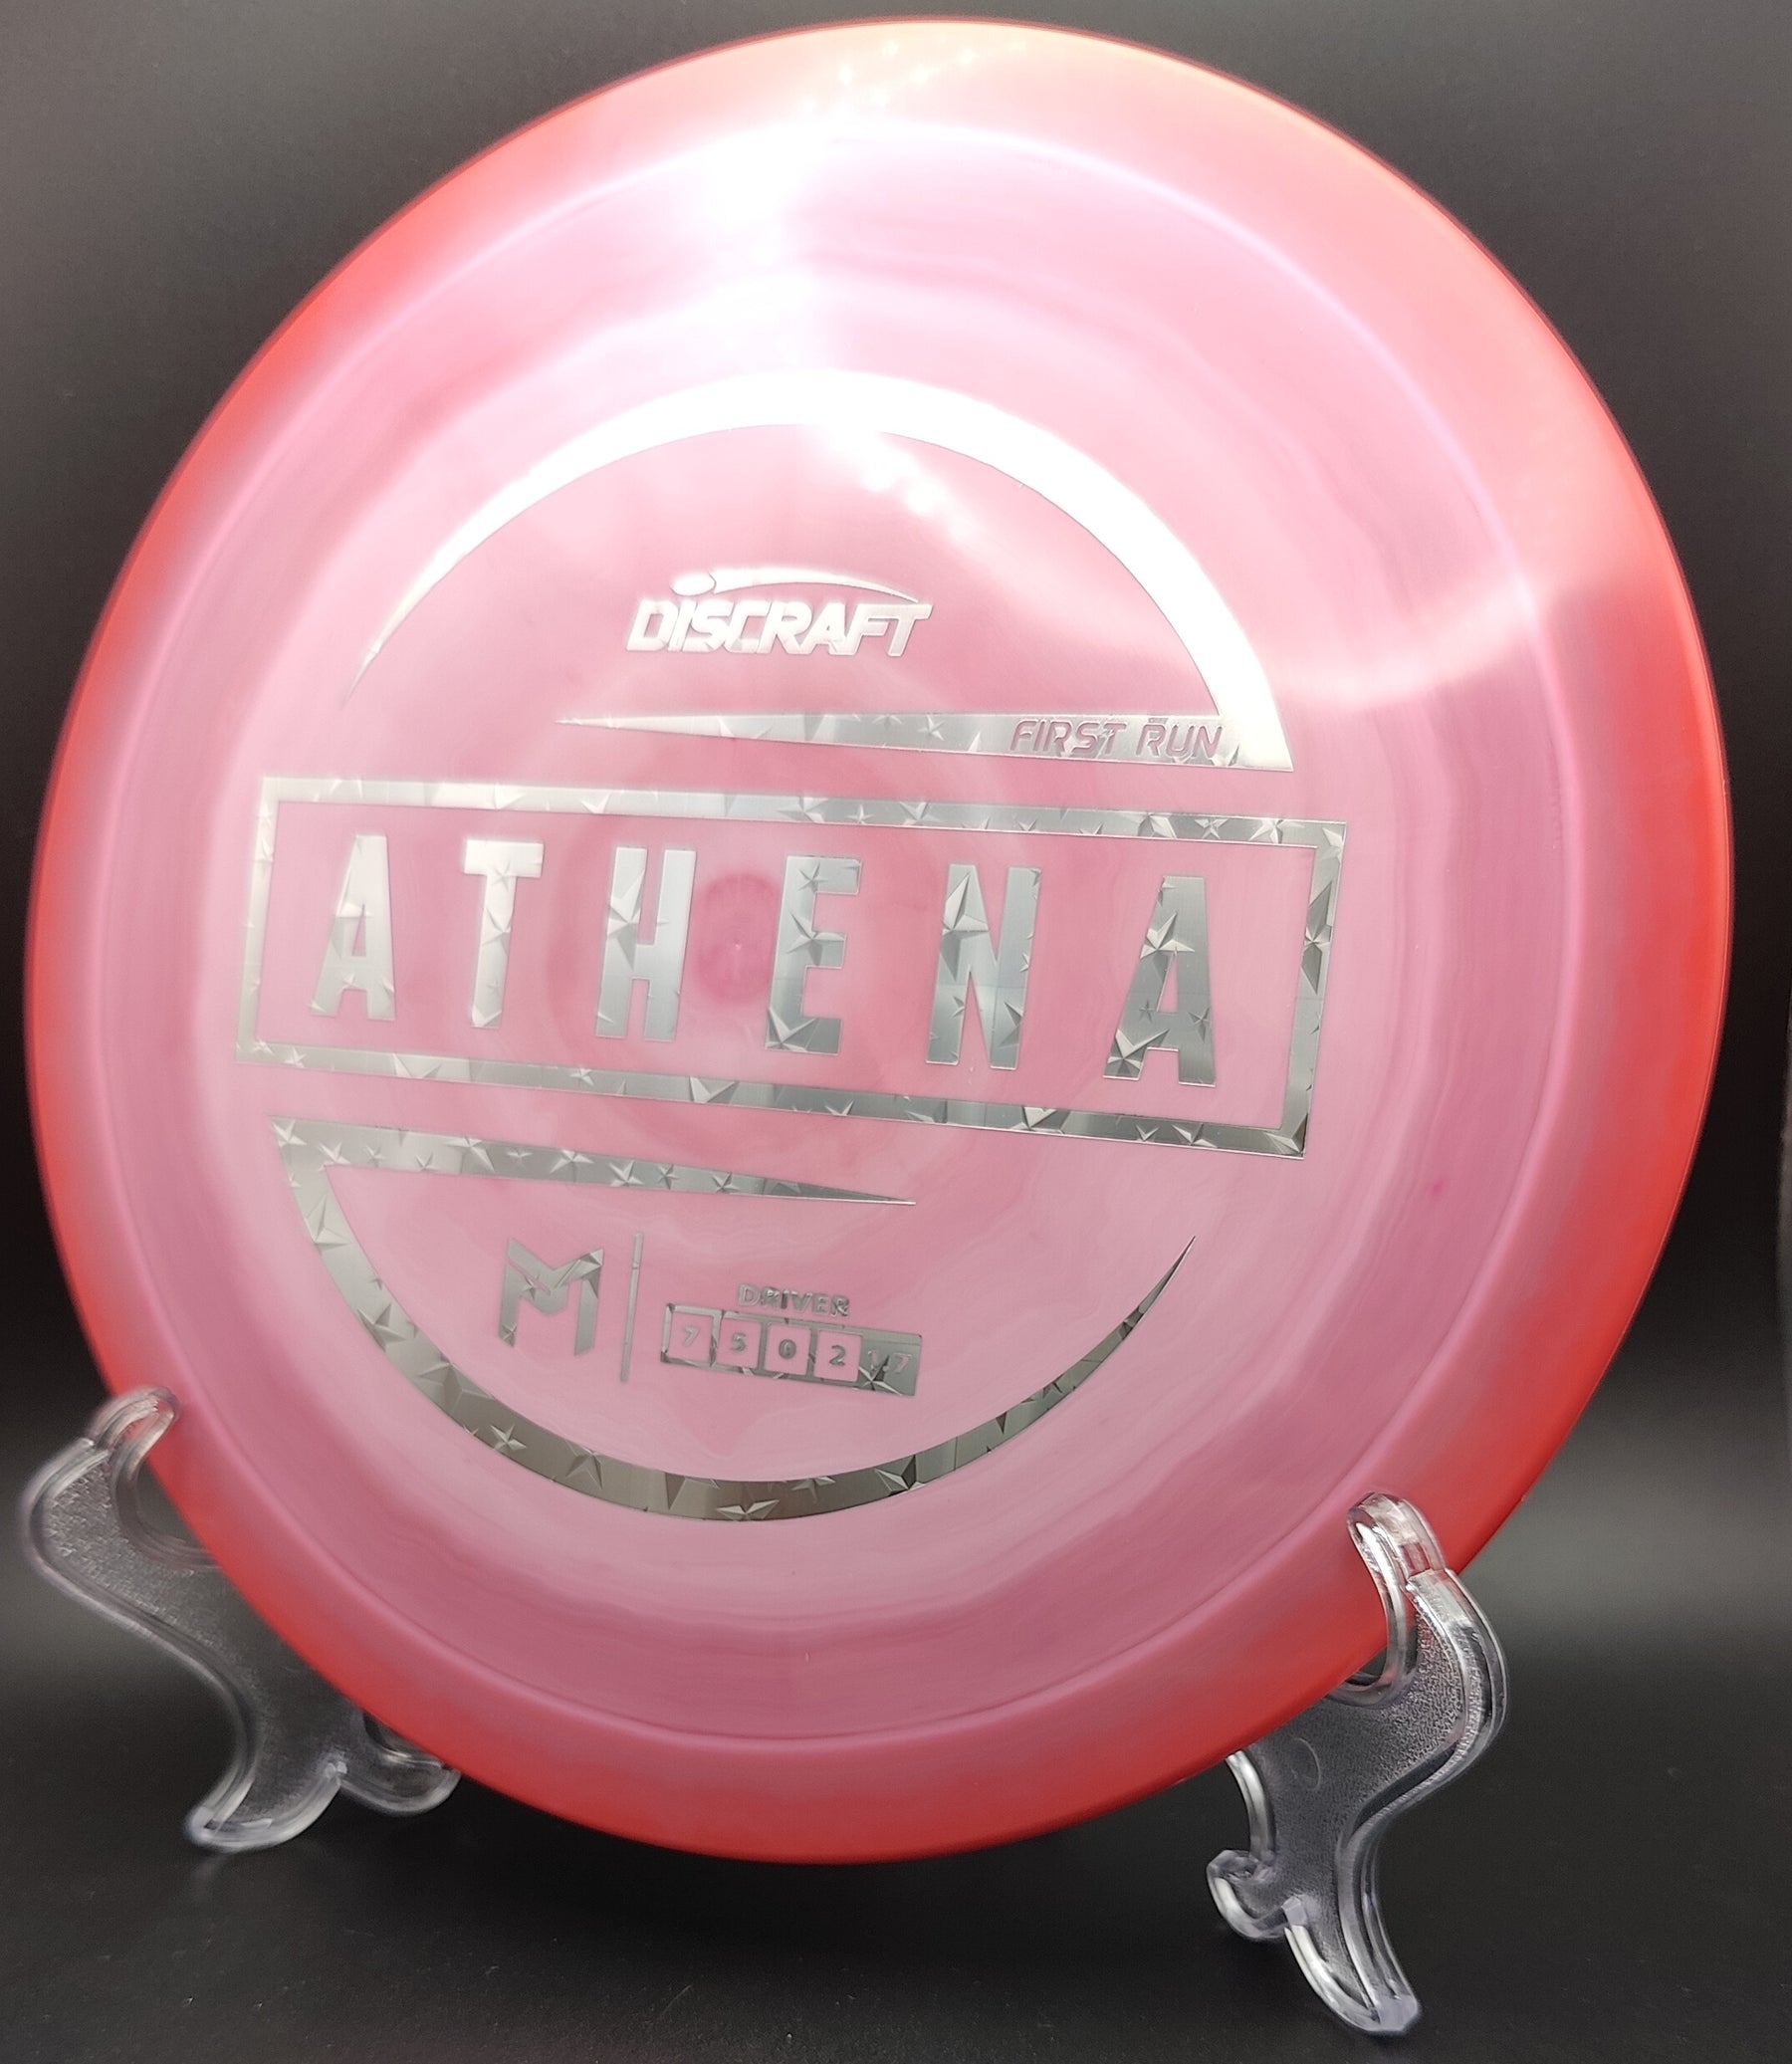 Discraft Athena - First Run